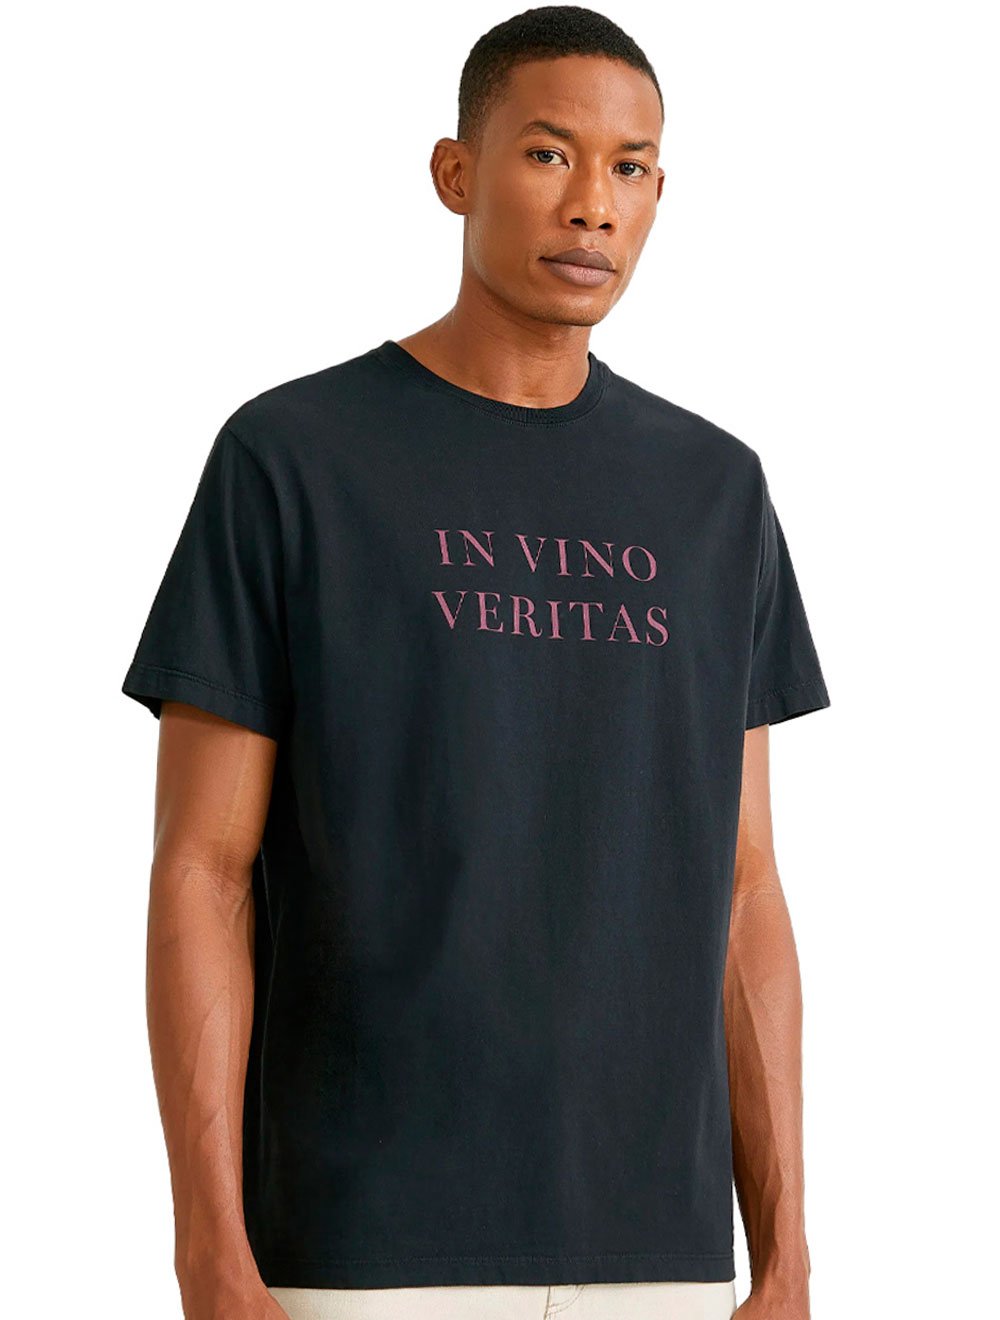 Camiseta Foxton Masculina In Vino Veritas Preta